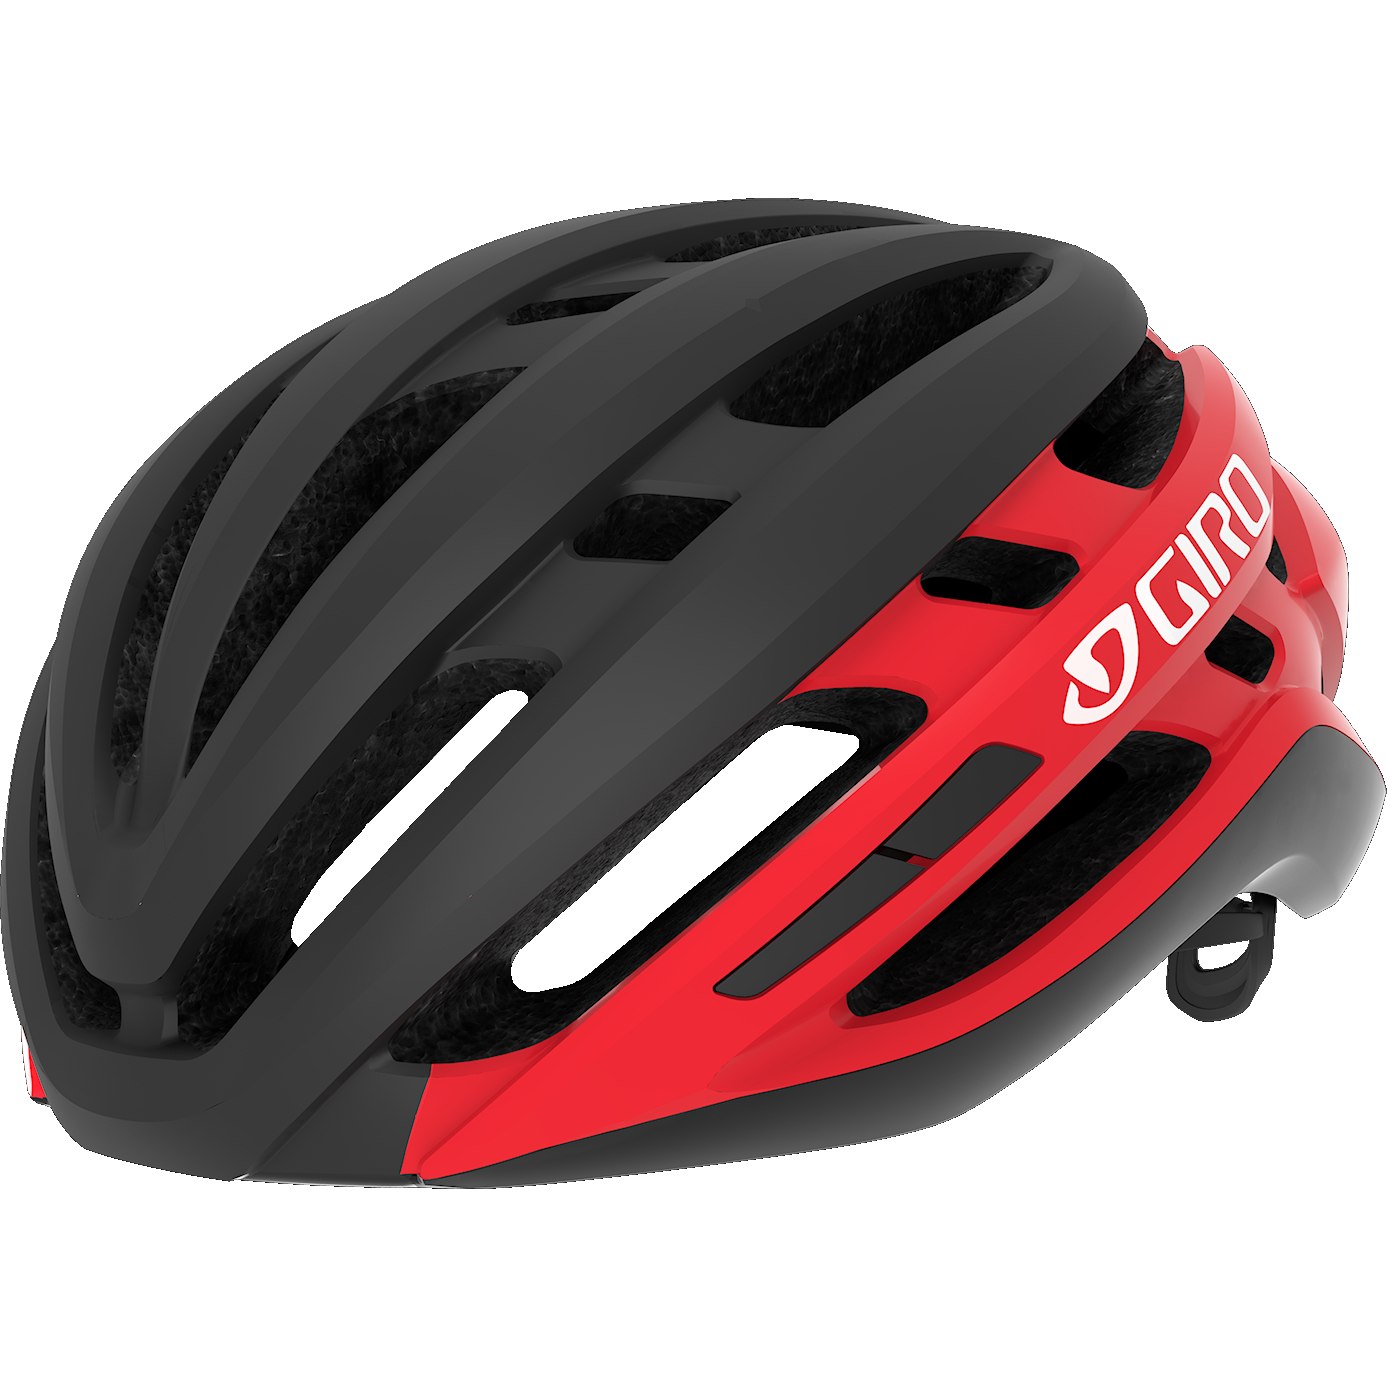 Picture of Giro Agilis Helmet - matte black / bright red